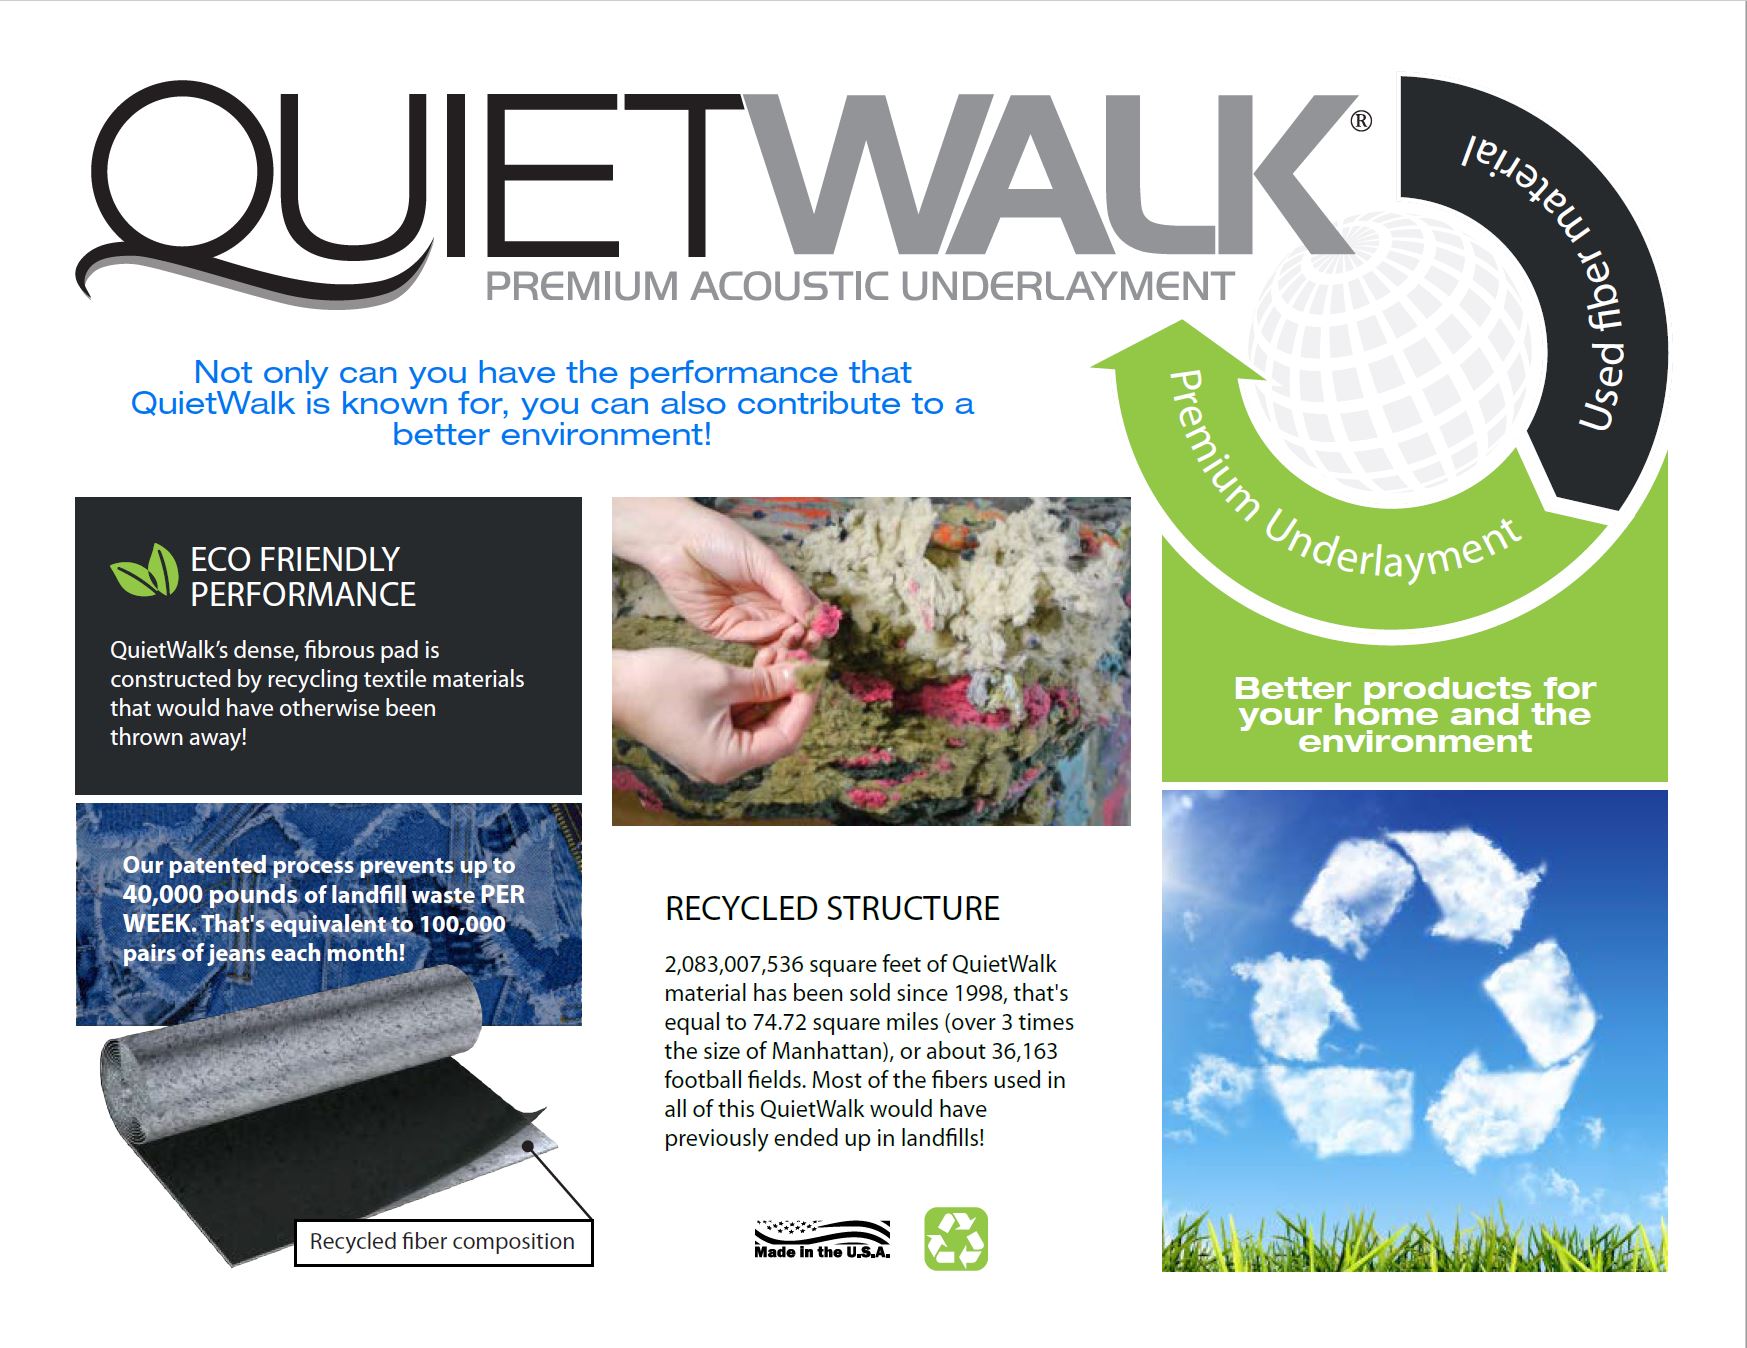 QuietWalk 360 Square Foot Luxury Vinyl Sound Reflecting Flooring  Underlayment 